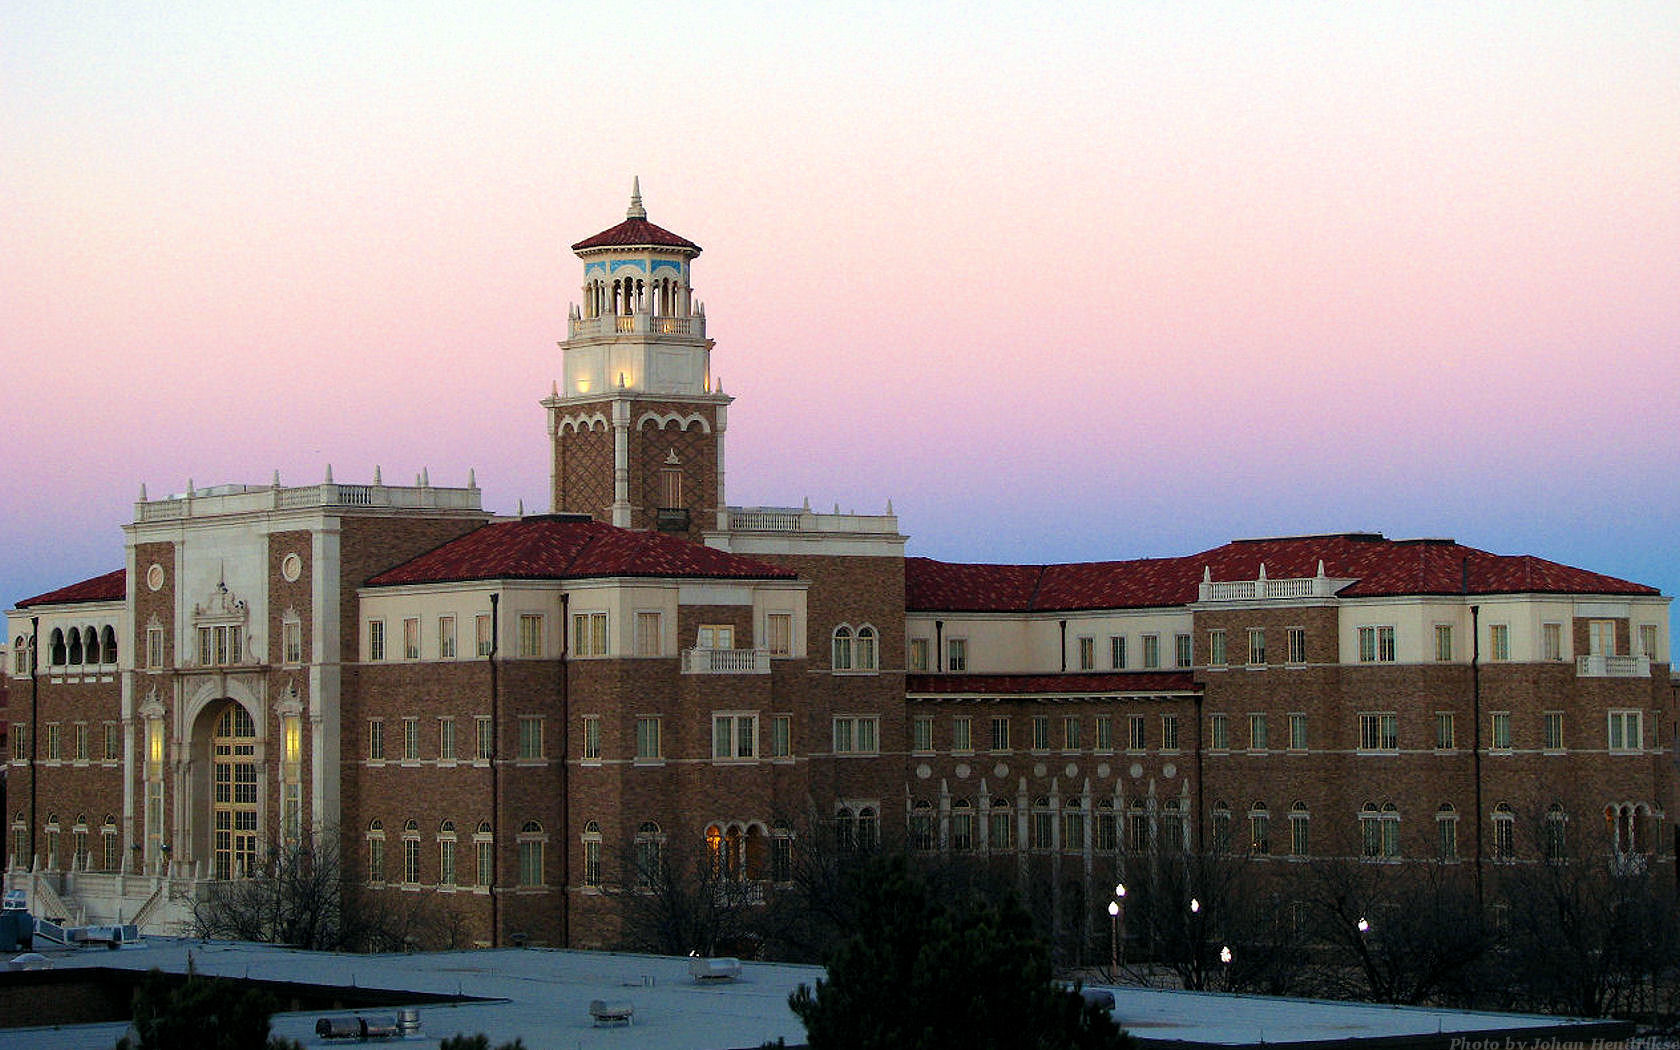 Texas Tech University Law School